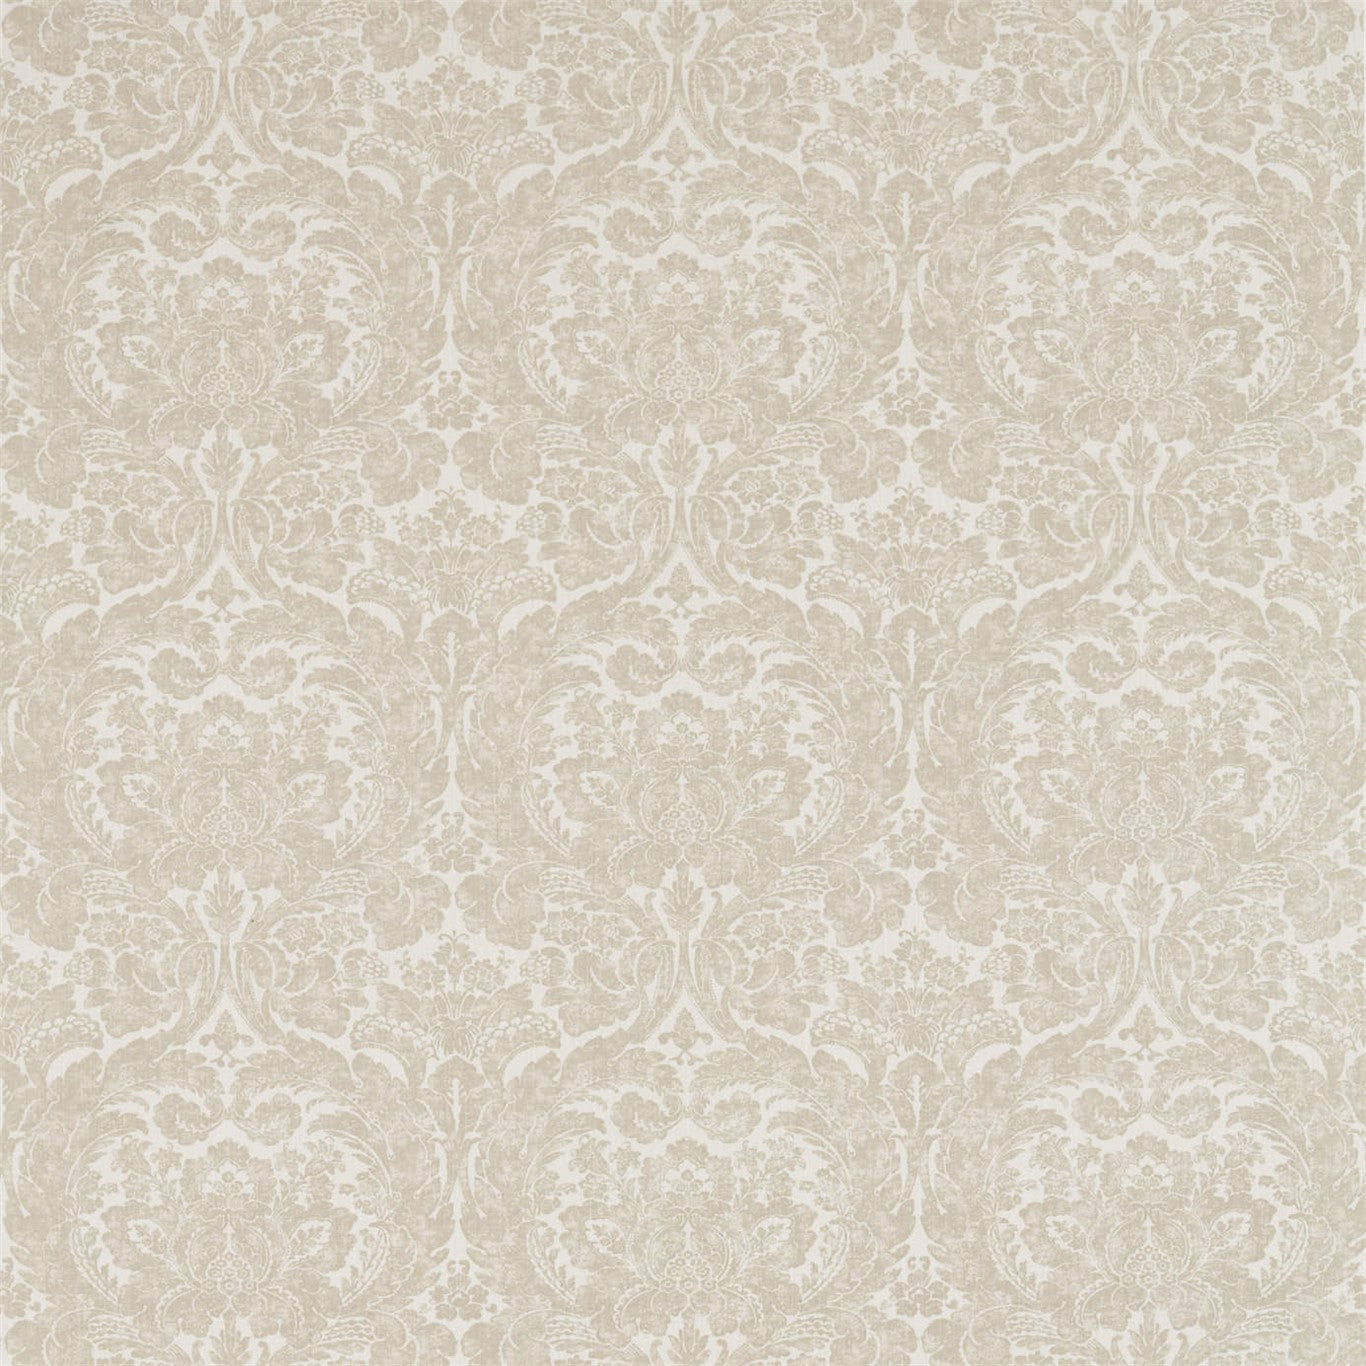 Courtney Fabric by Sanderson - DDAM226381 - Parchment/Stone